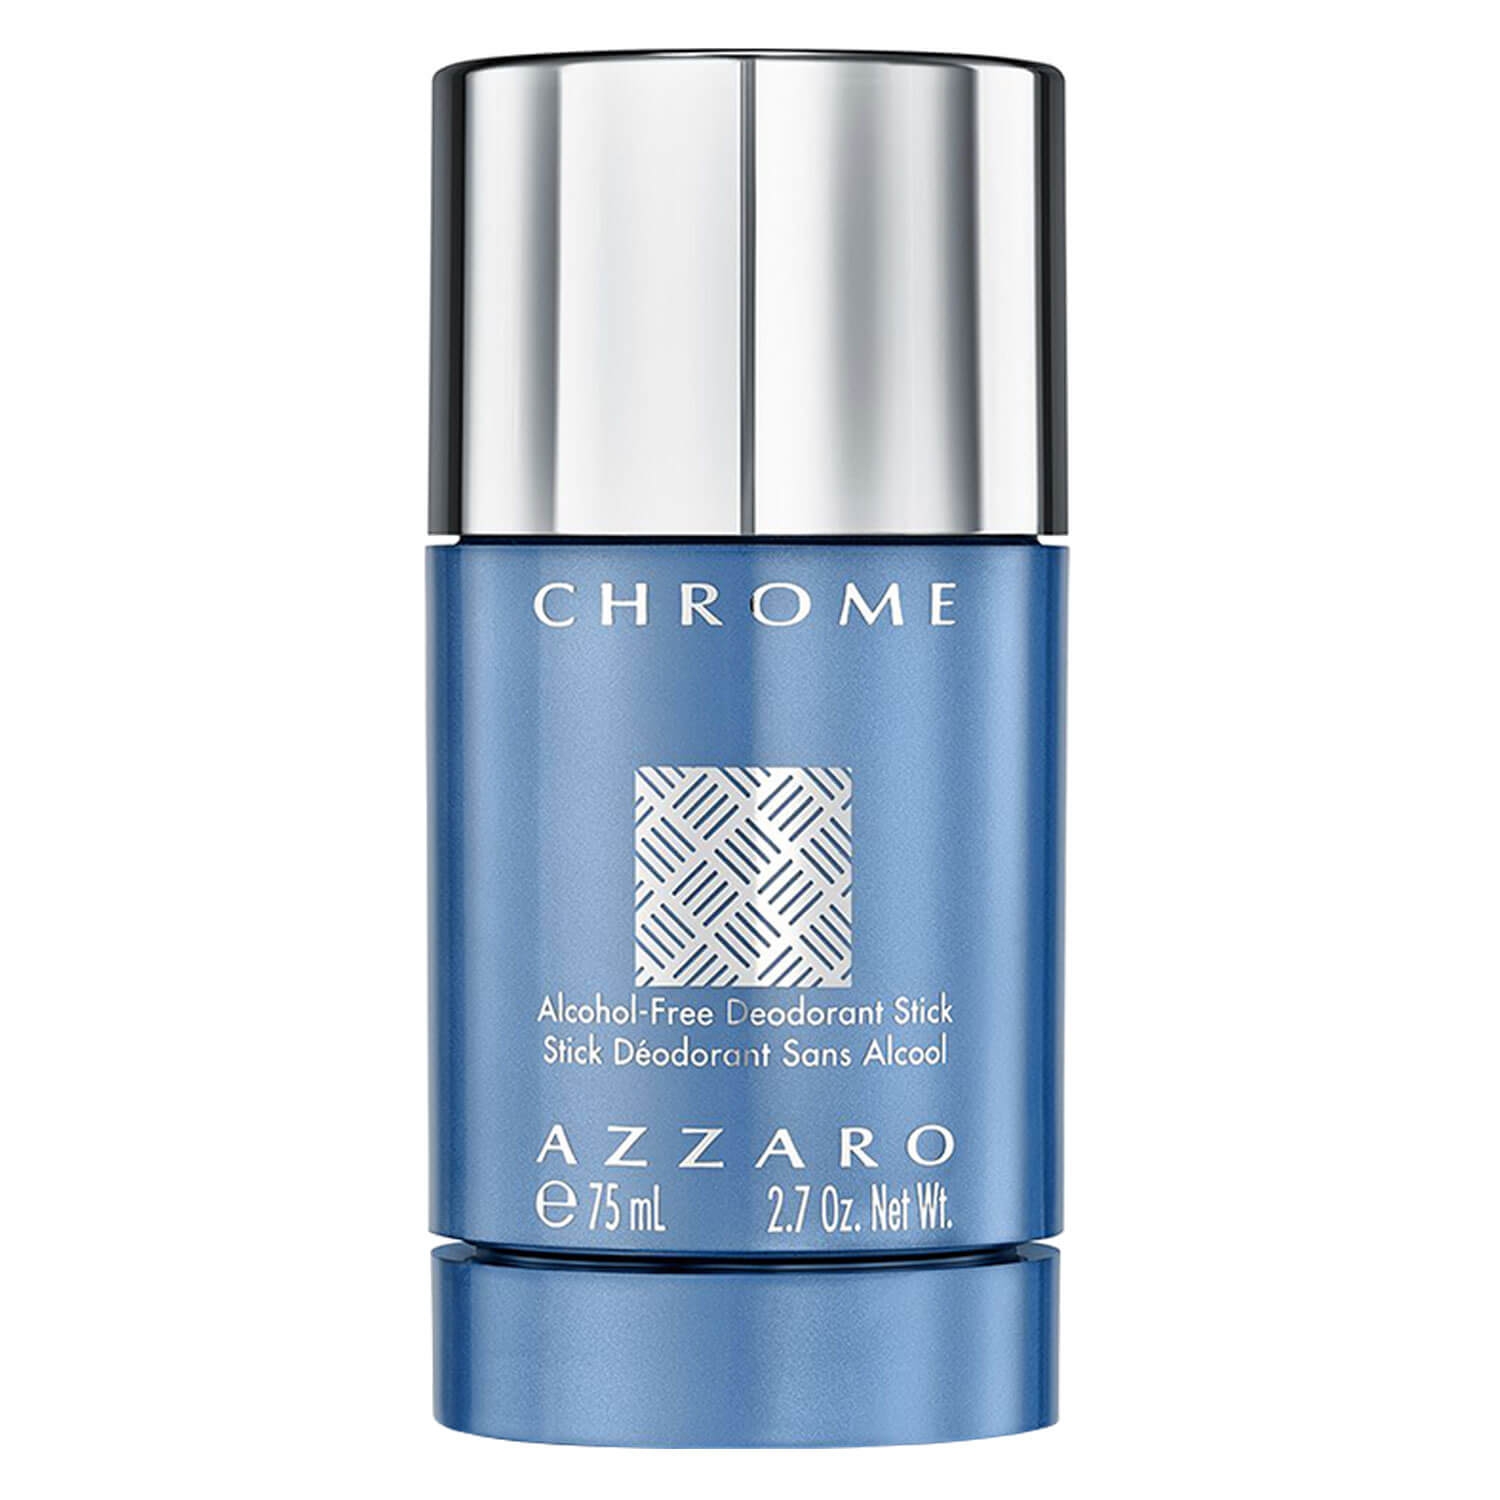 Produktbild von Azzaro Chrome - Alcohol-Free Deodorant Stick